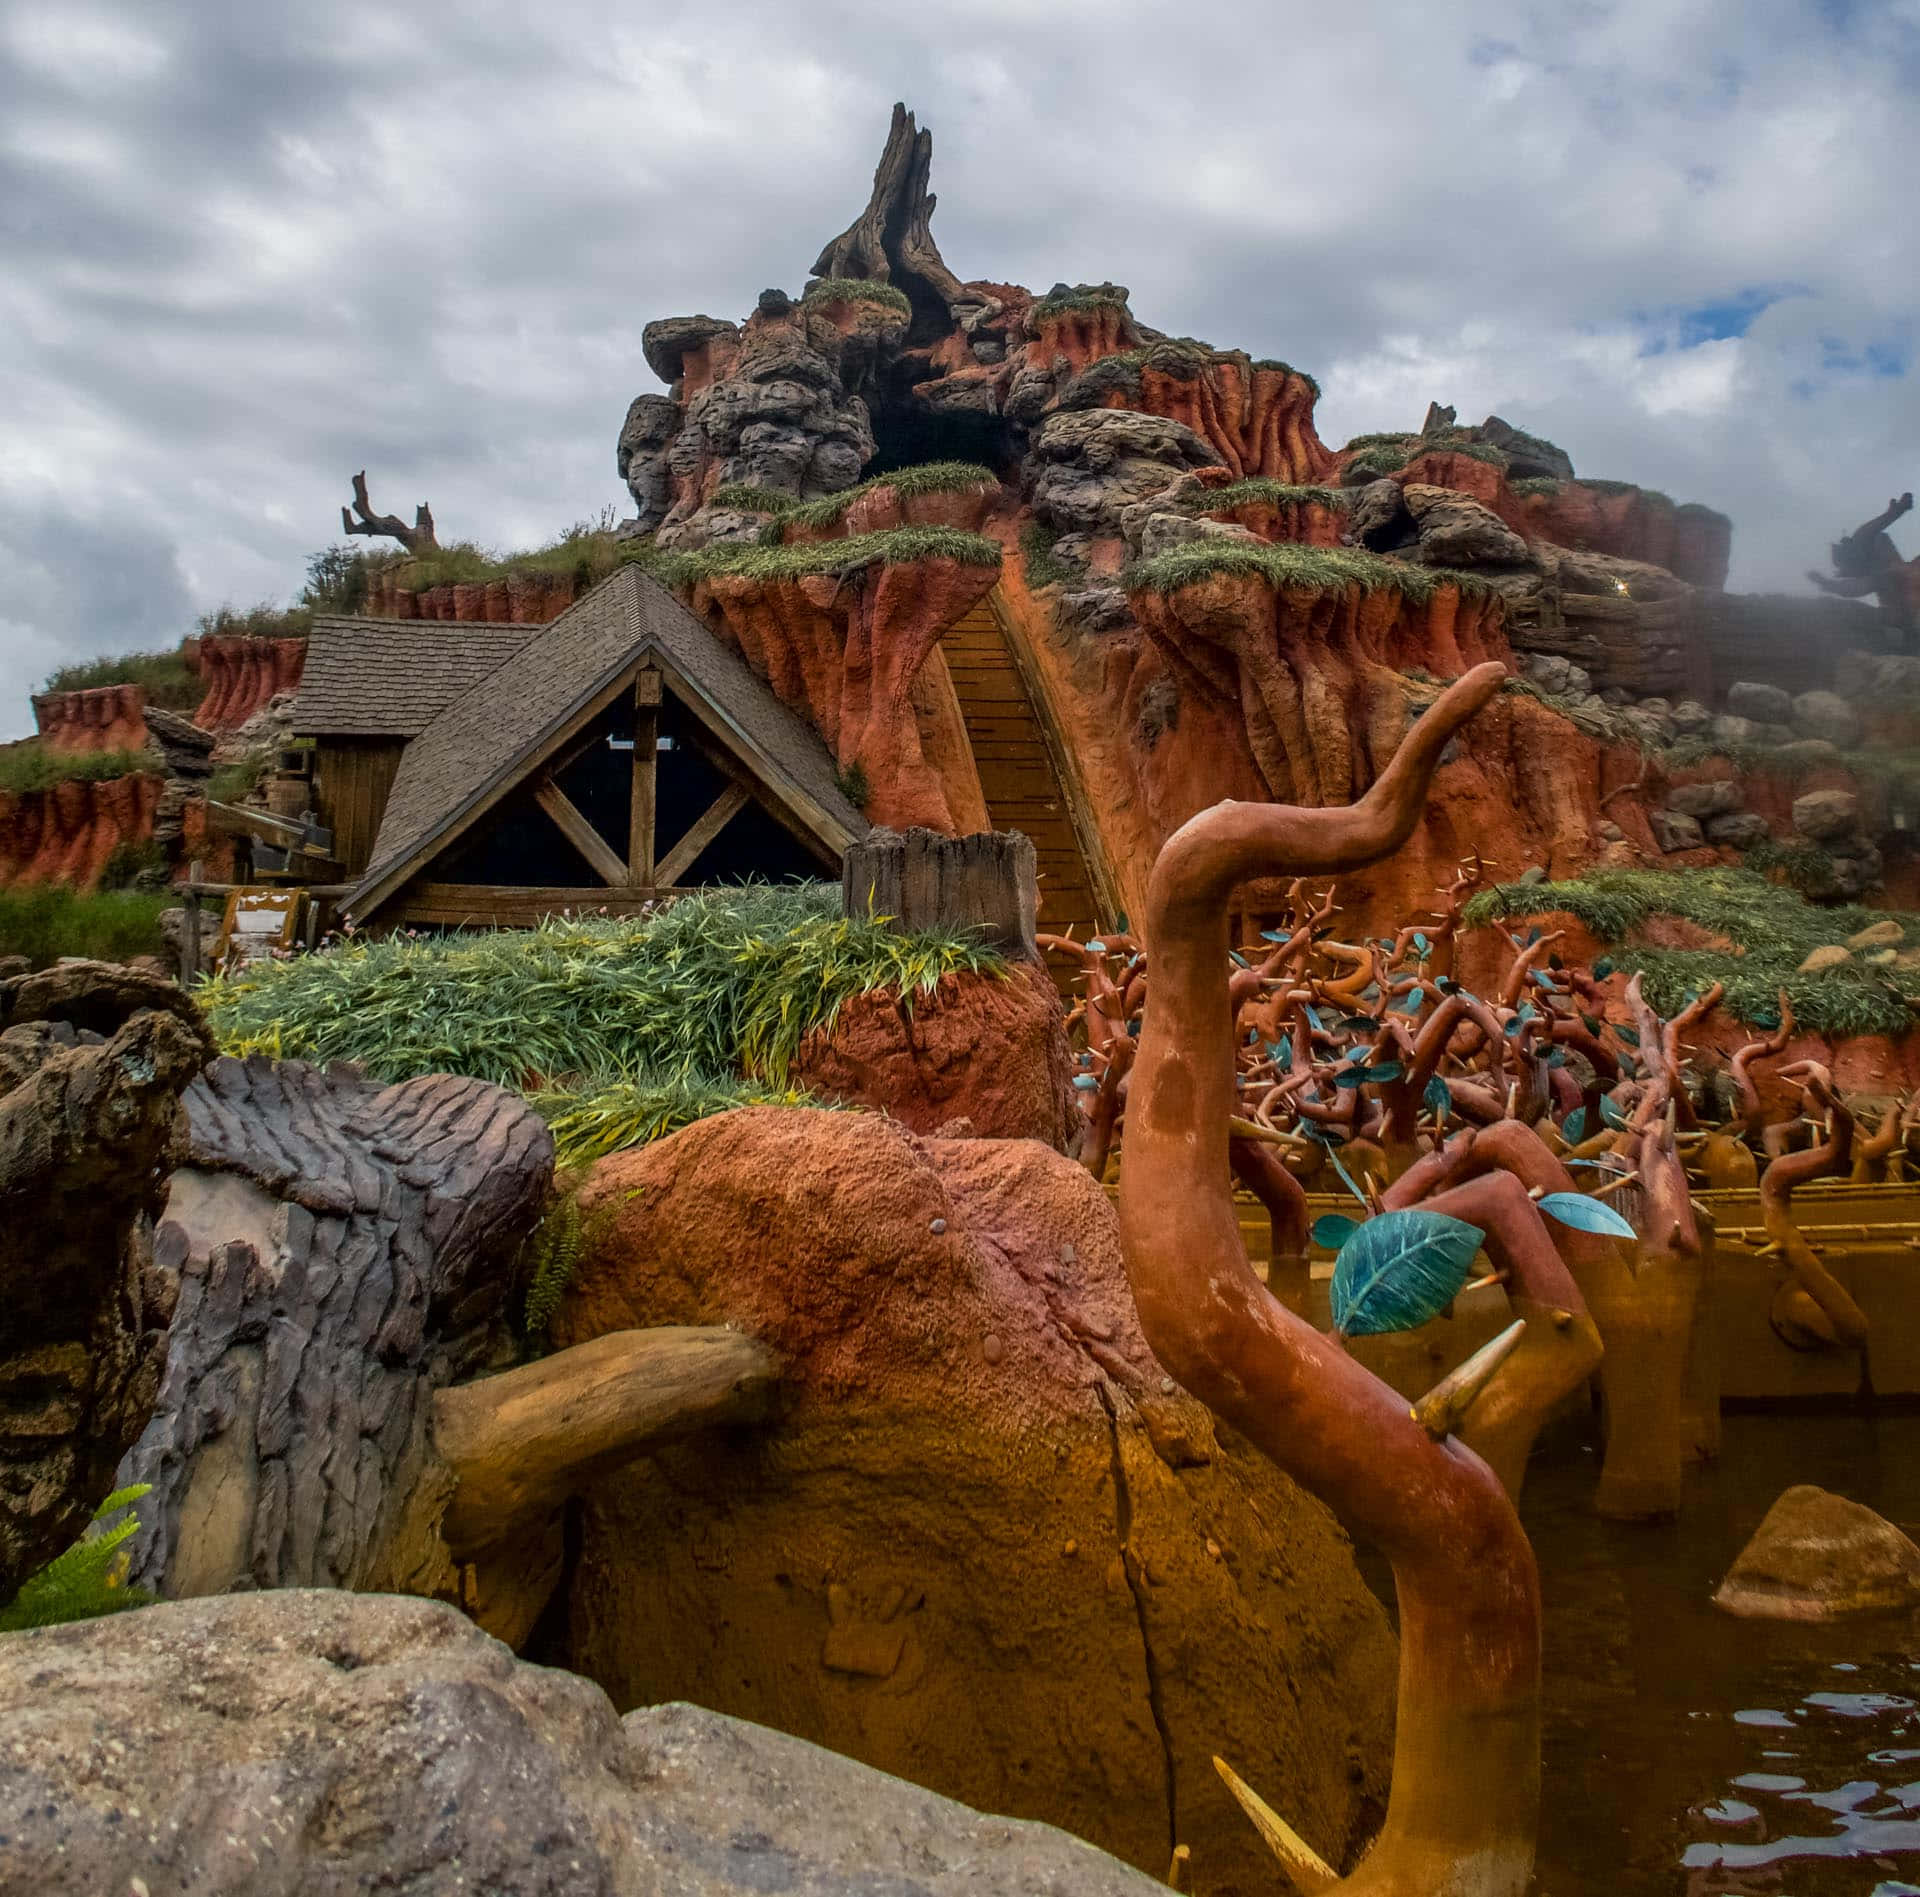 Experience the thrill of Disney's Splash Mountain